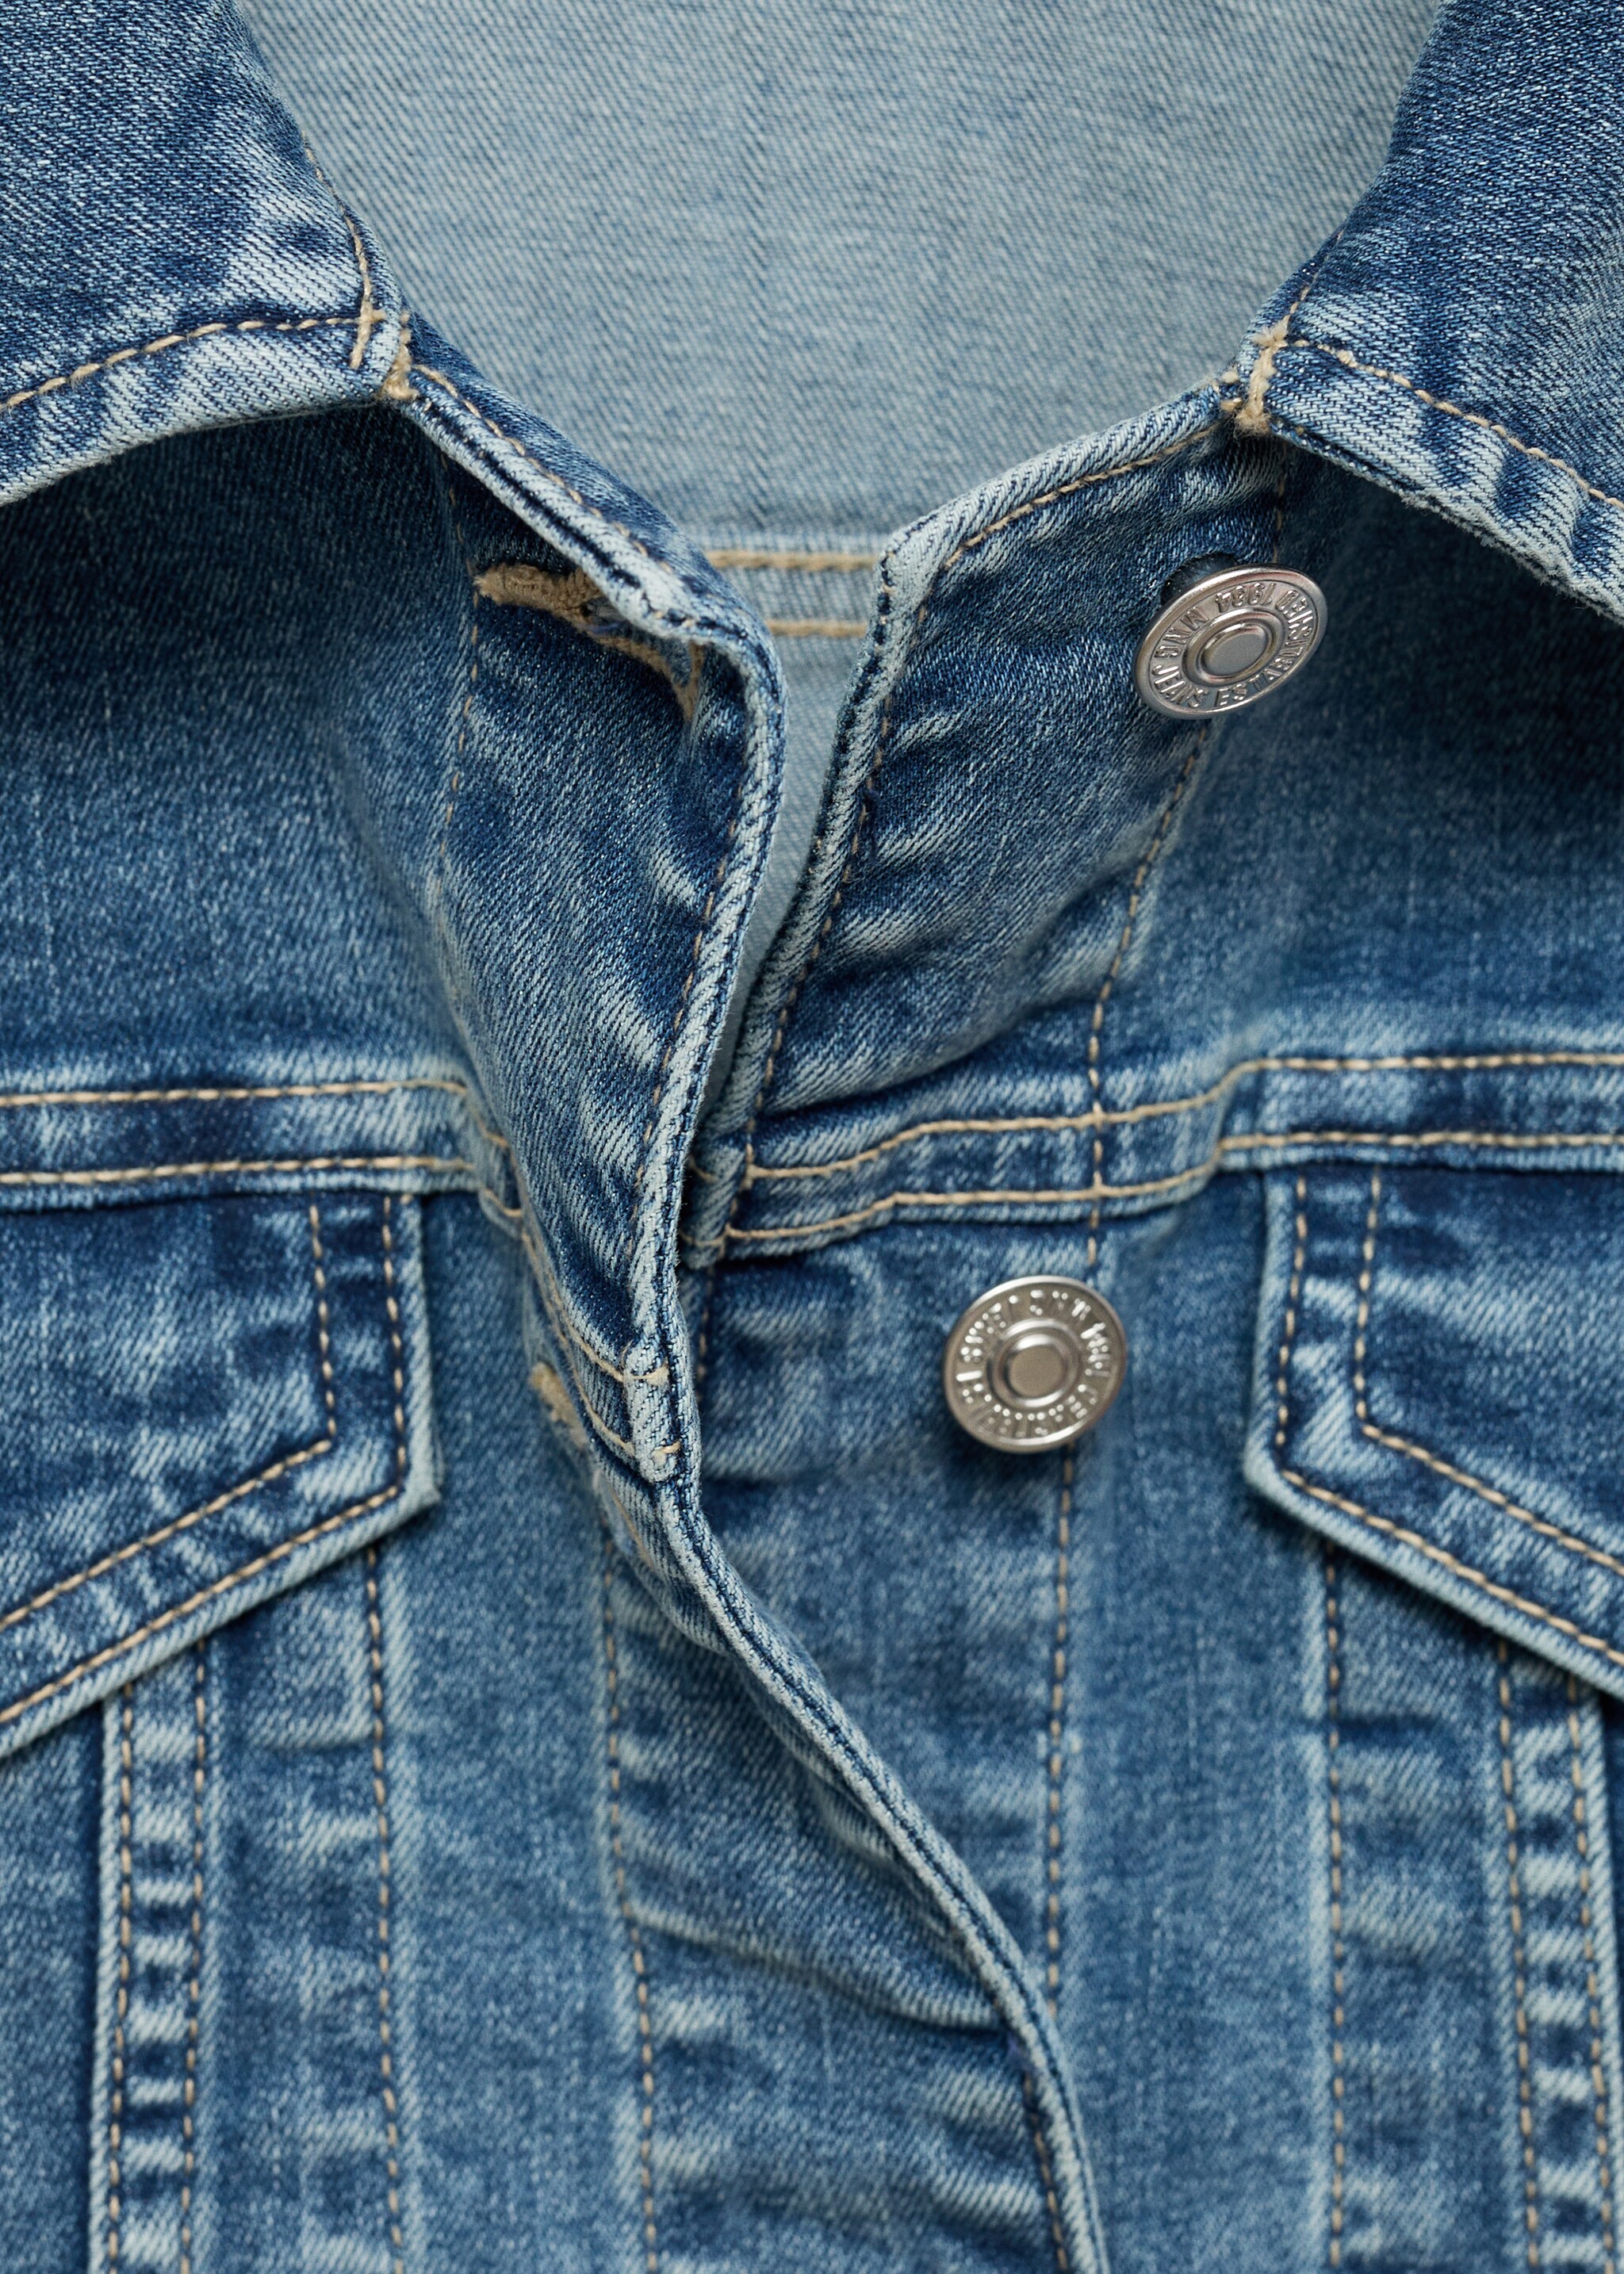 Pocketed denim jacket - Details of the article 8